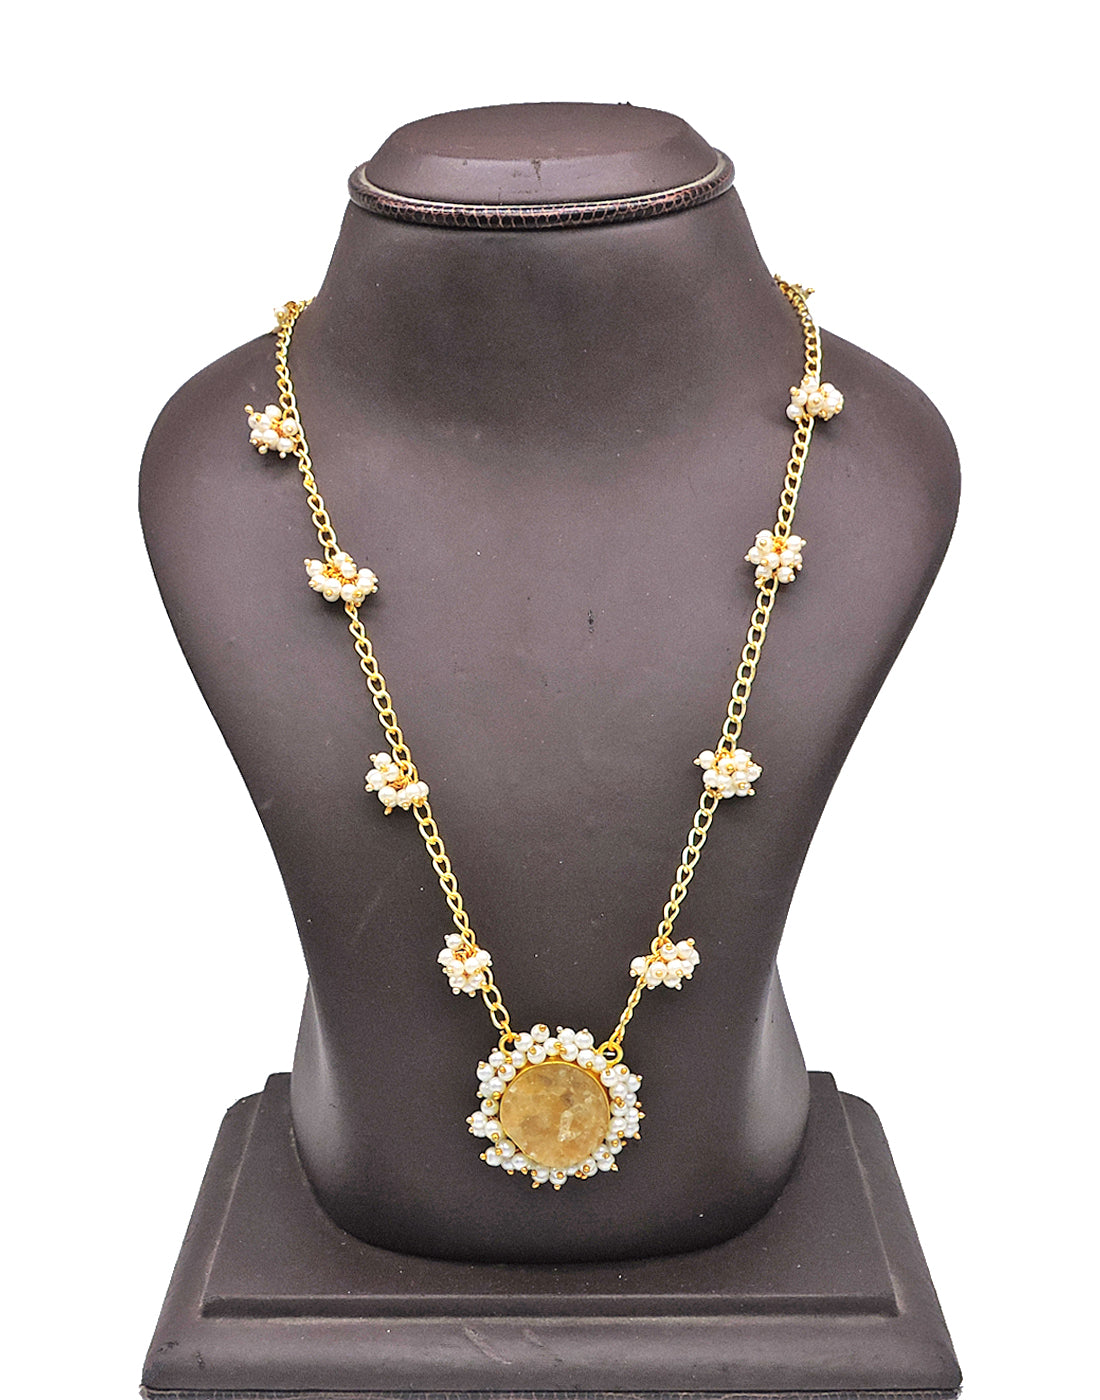 Bloom Necklace (Jasper) - Statement Necklaces - Gold-Plated & Hypoallergenic Jewellery - Made in India - Dubai Jewellery - Dori